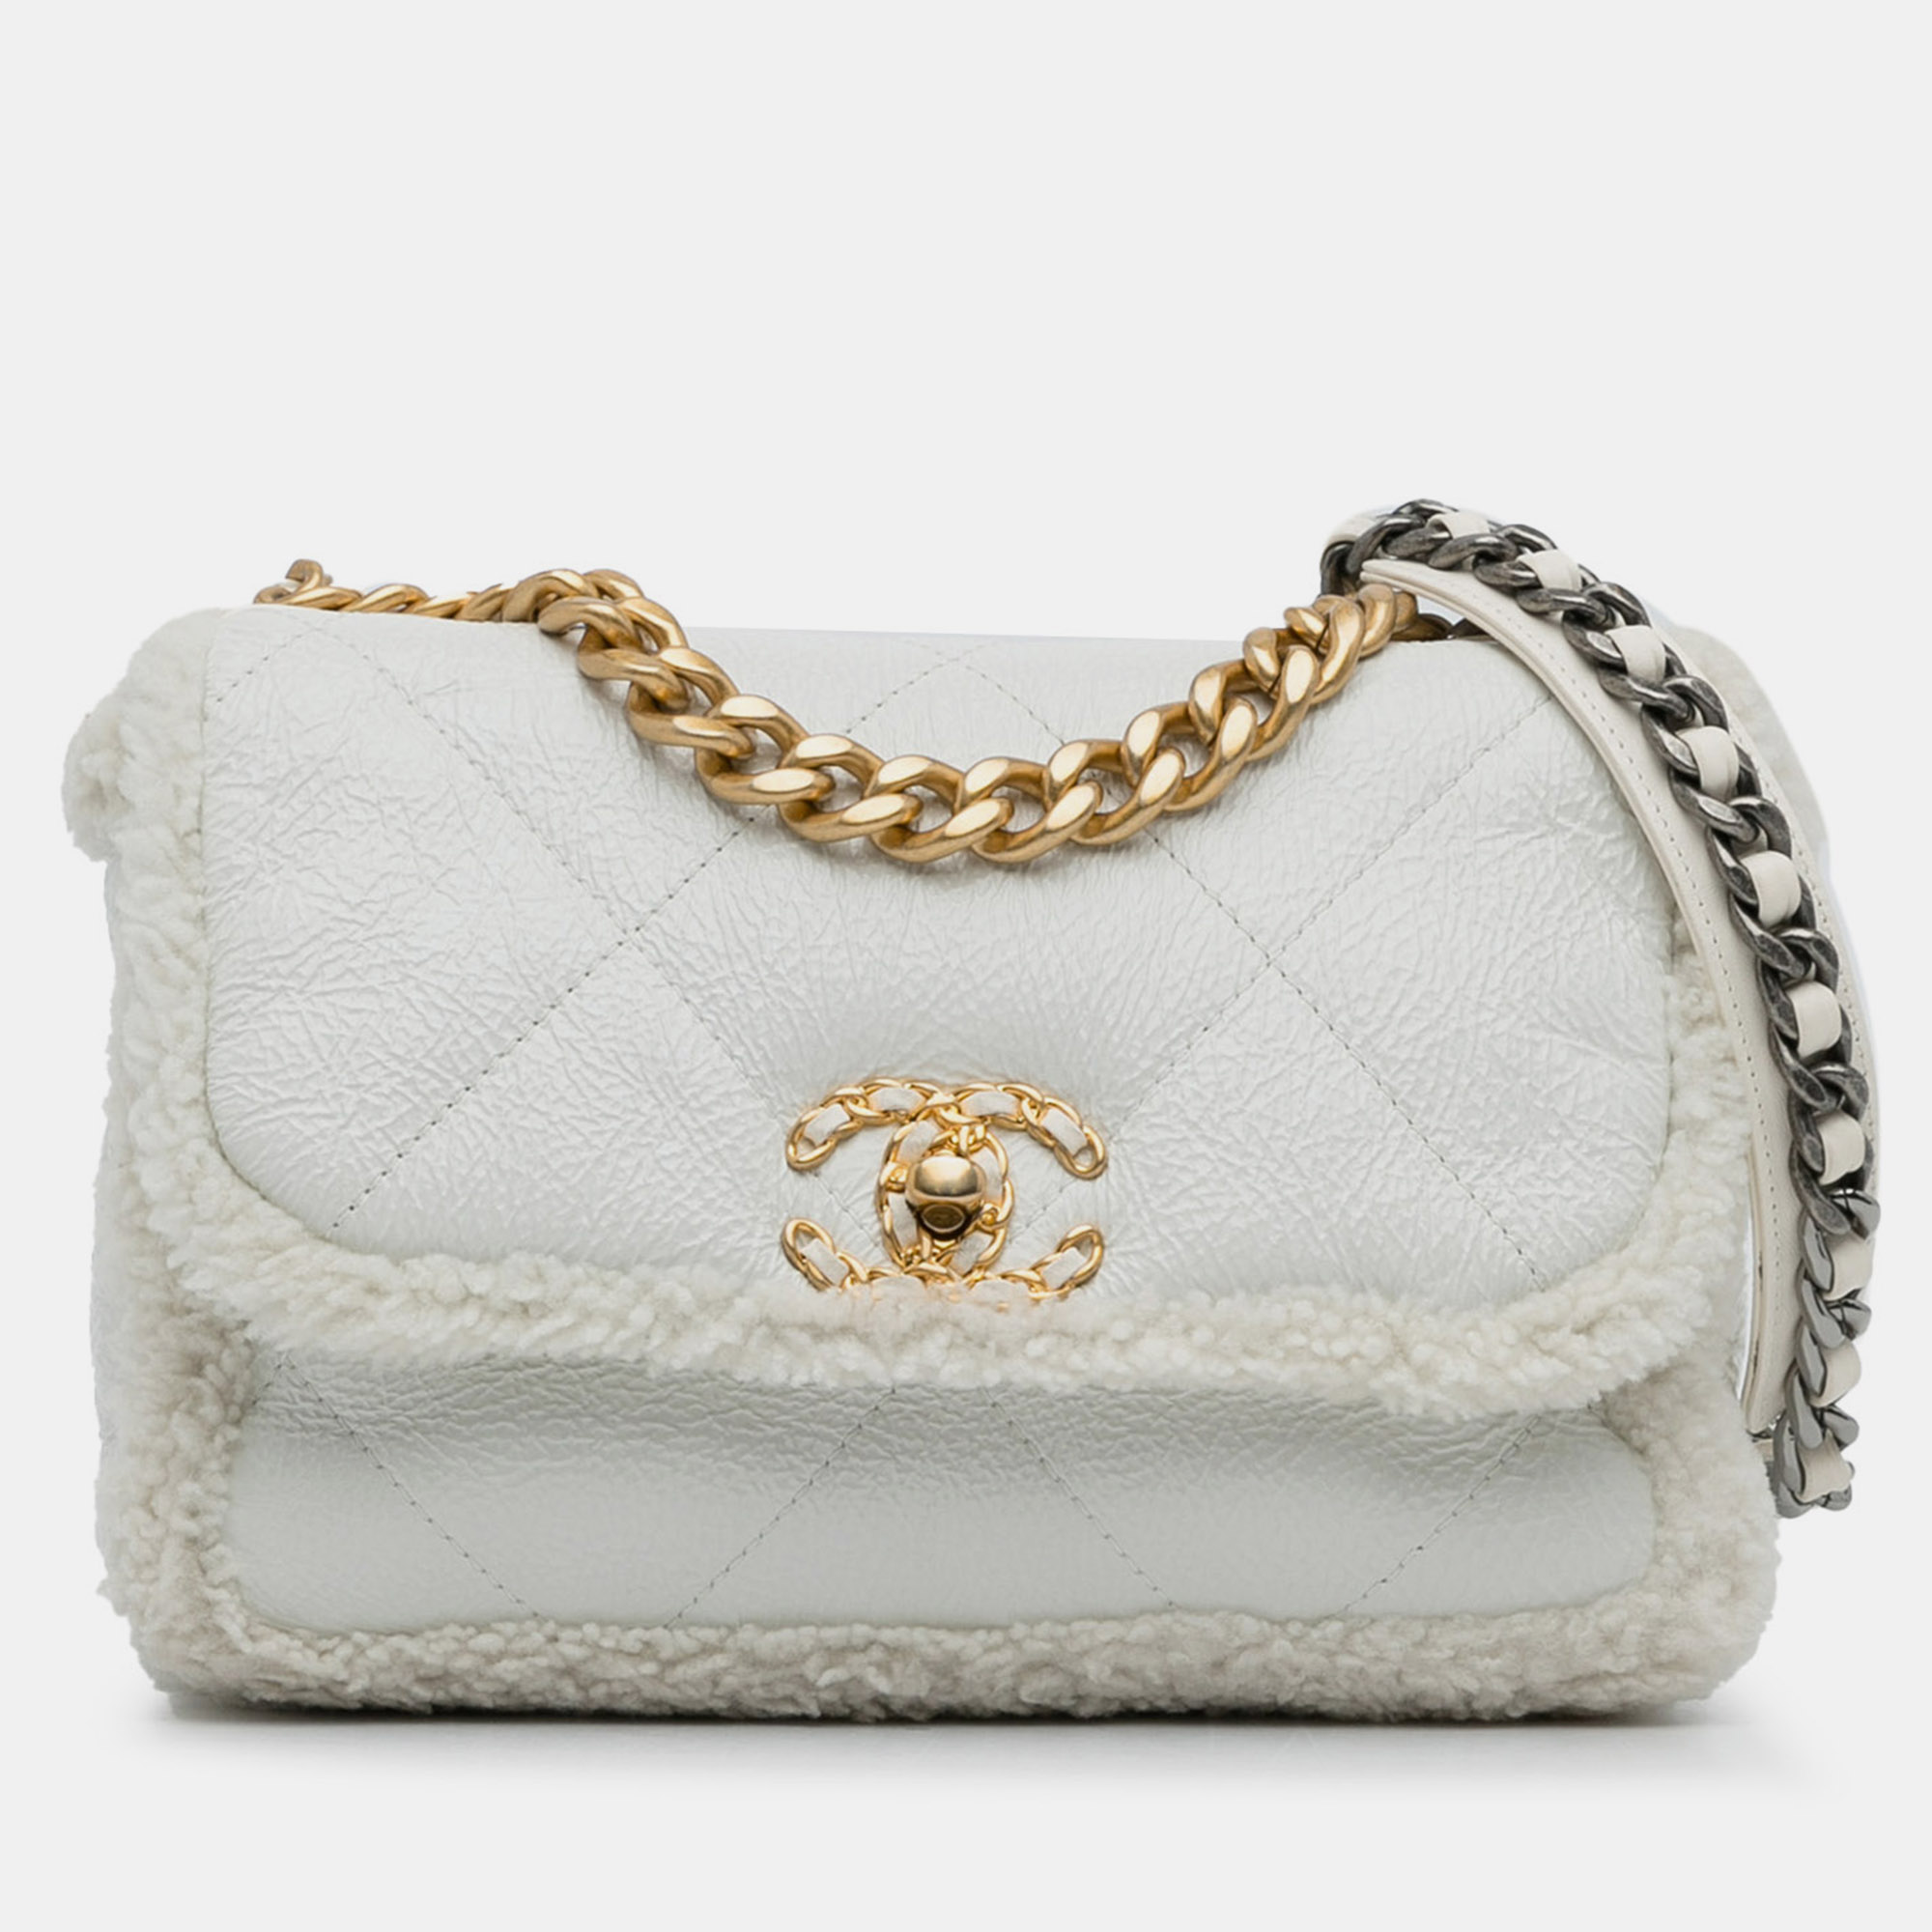 Chanel medium patent shearling flap bag